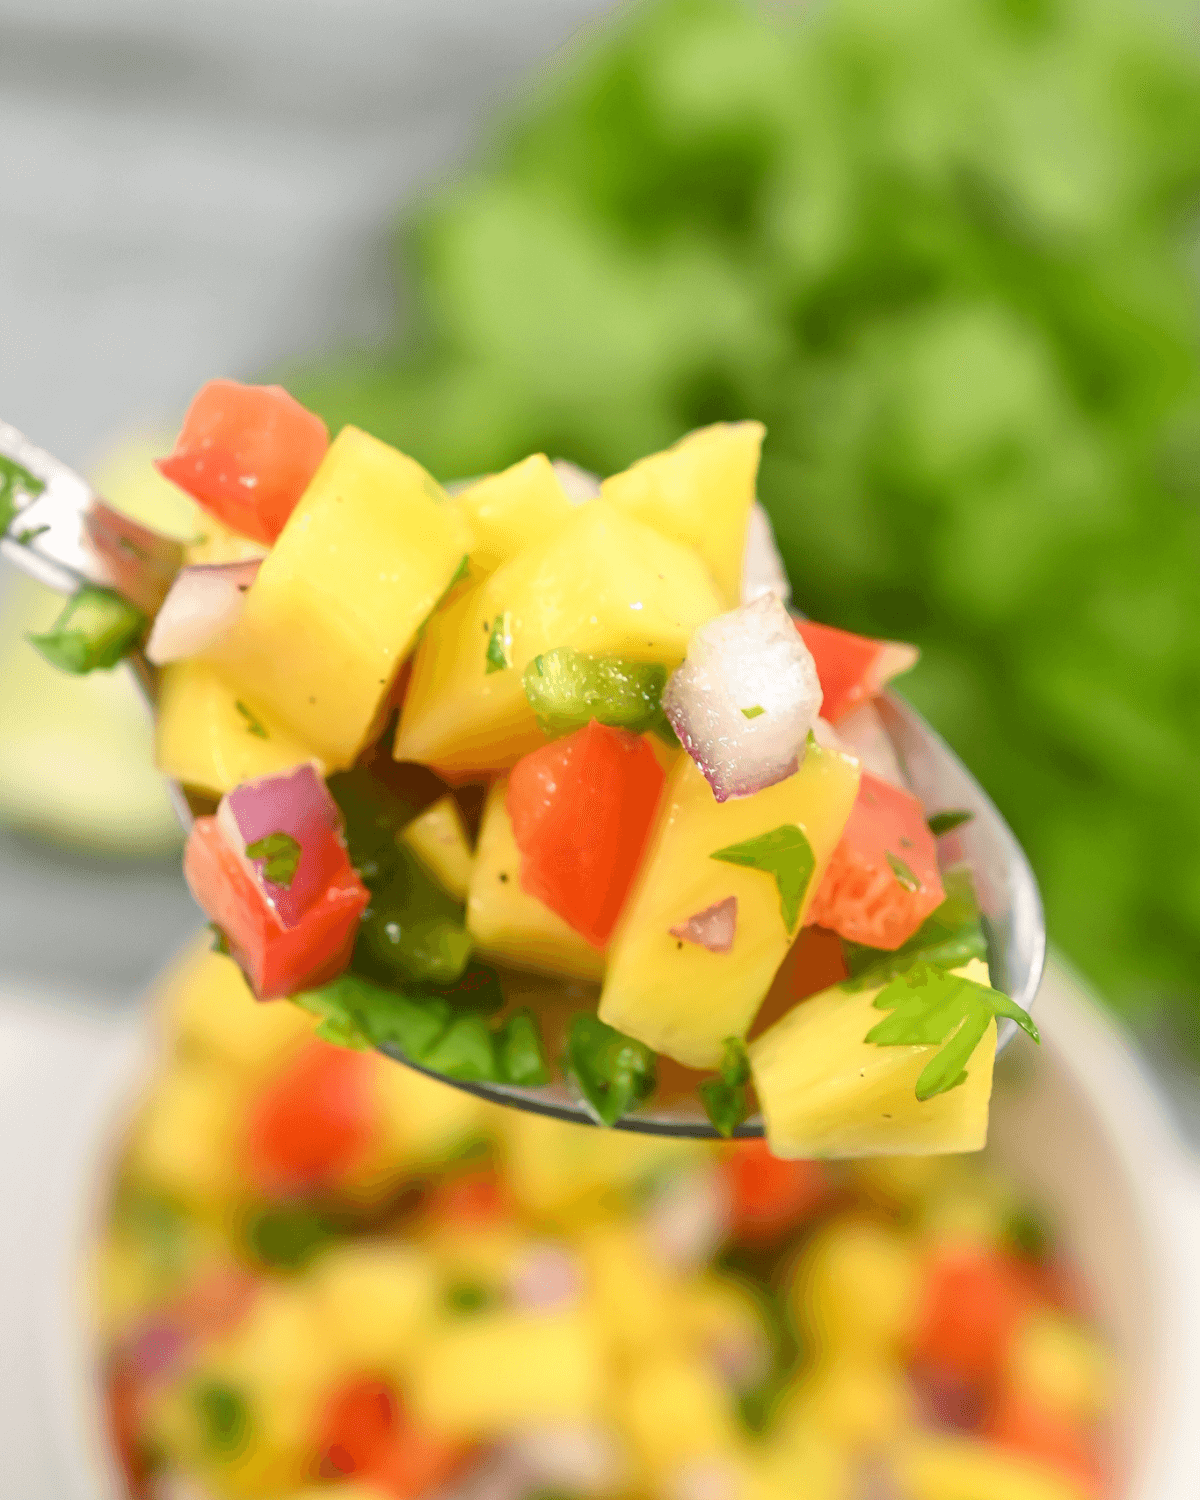 A colorful spoonful of mango salsa.